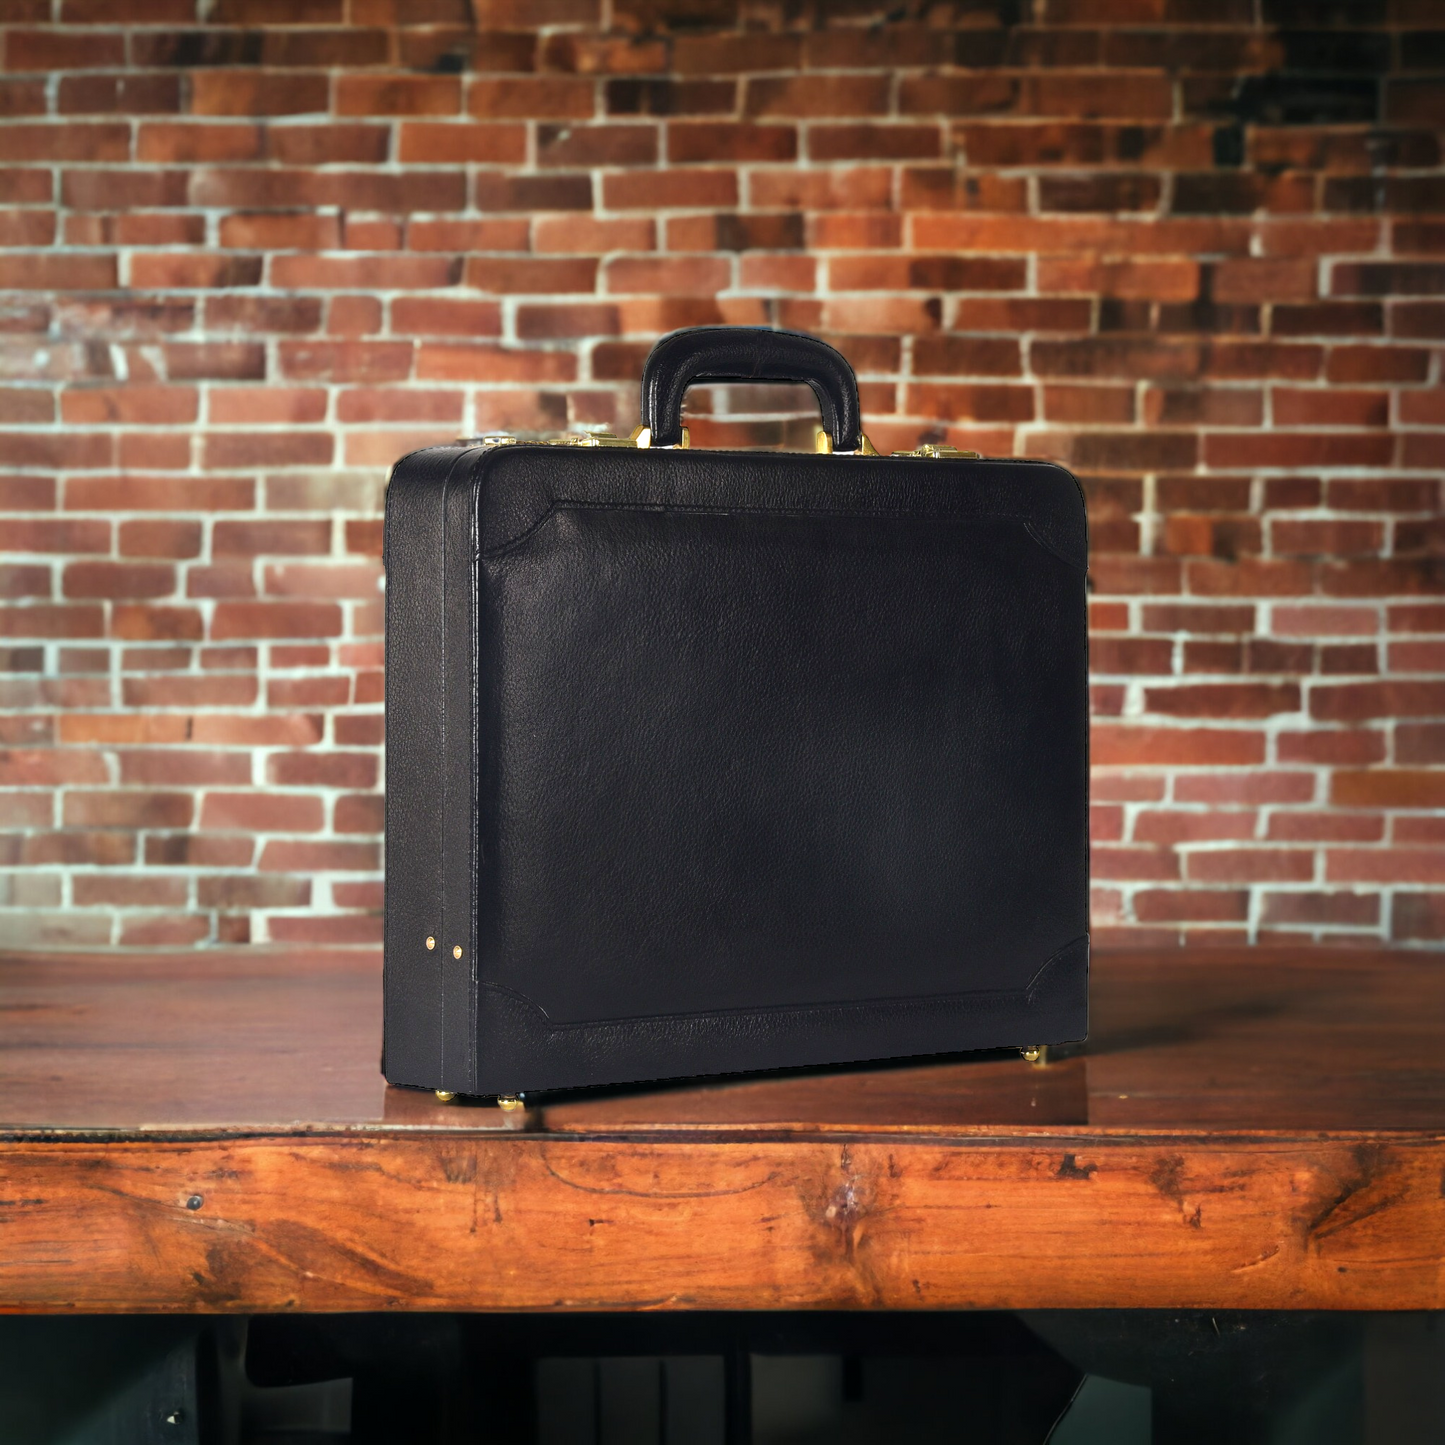 Genuine Leather Attache Briefcase Business Handbag for Men 14 Inches Laptop MacBook Carry Case Doctors Briefcase Office Handbag (Black)